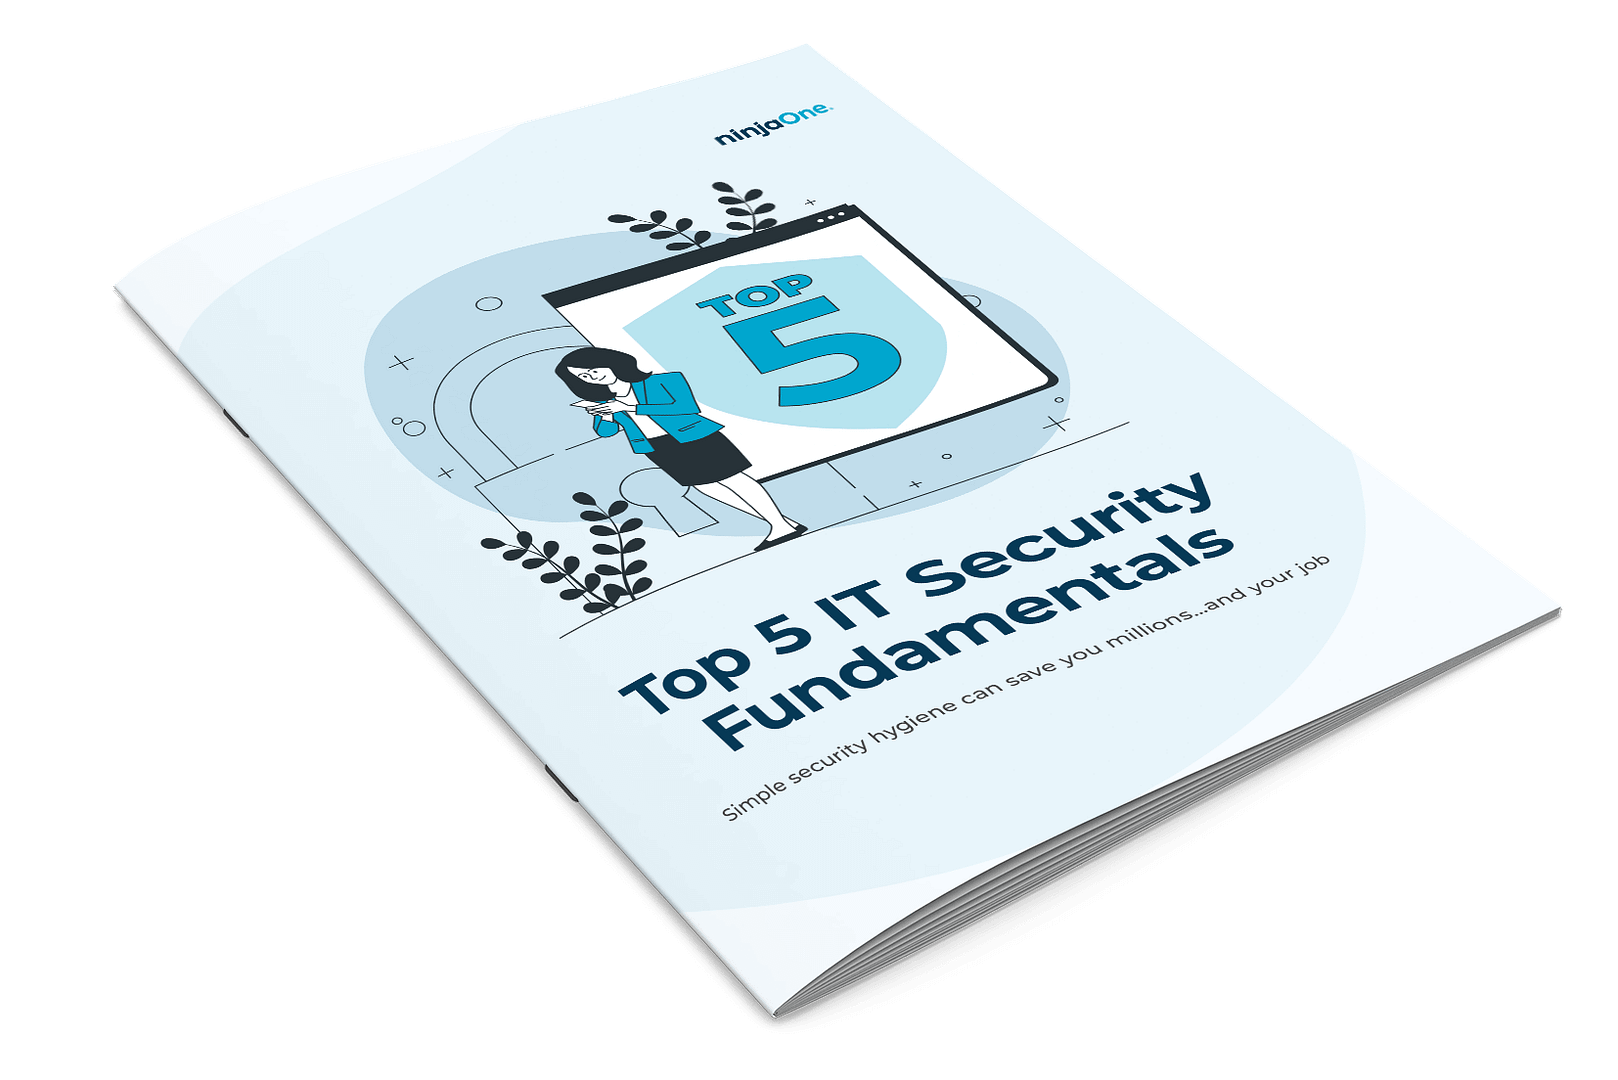 Top 5 IT Security Fundamentals